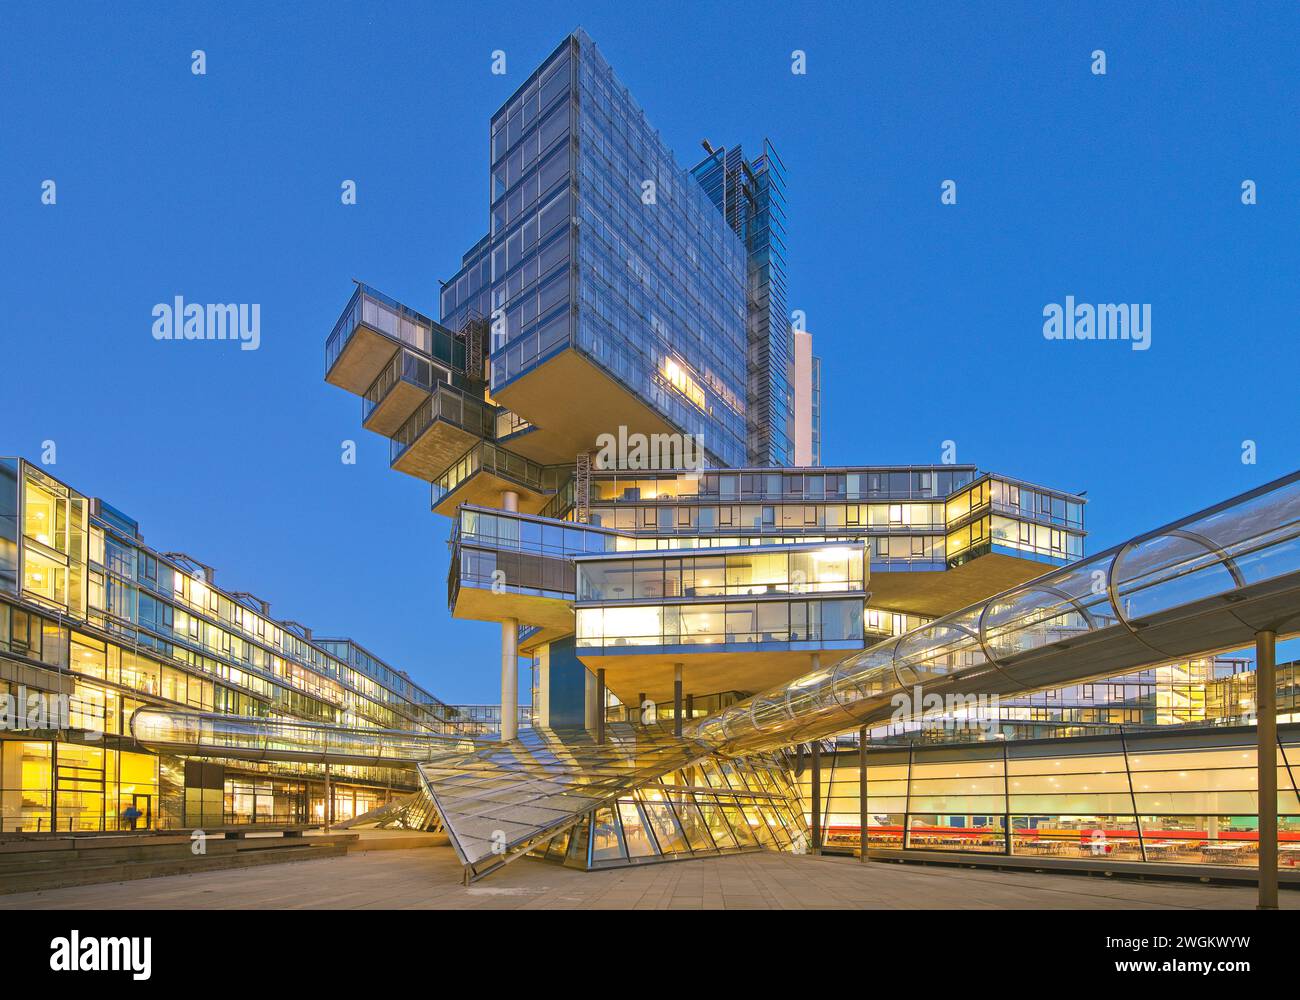 Bâtiment administratif de Nord LB, Norddeutsche Landesbank, Allemagne, basse-Saxe, Hanovre Banque D'Images